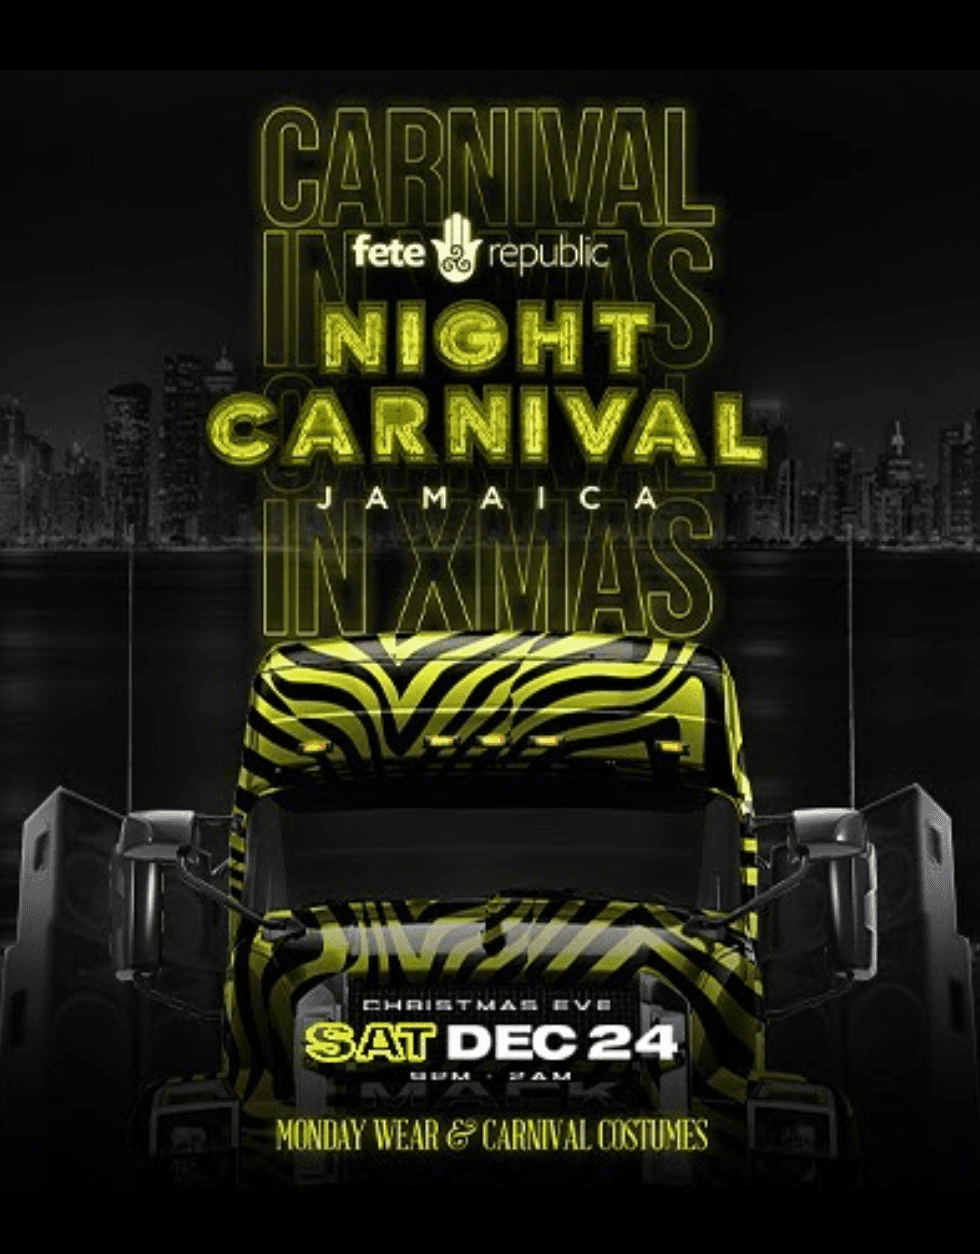 Night Carnival Jamaica